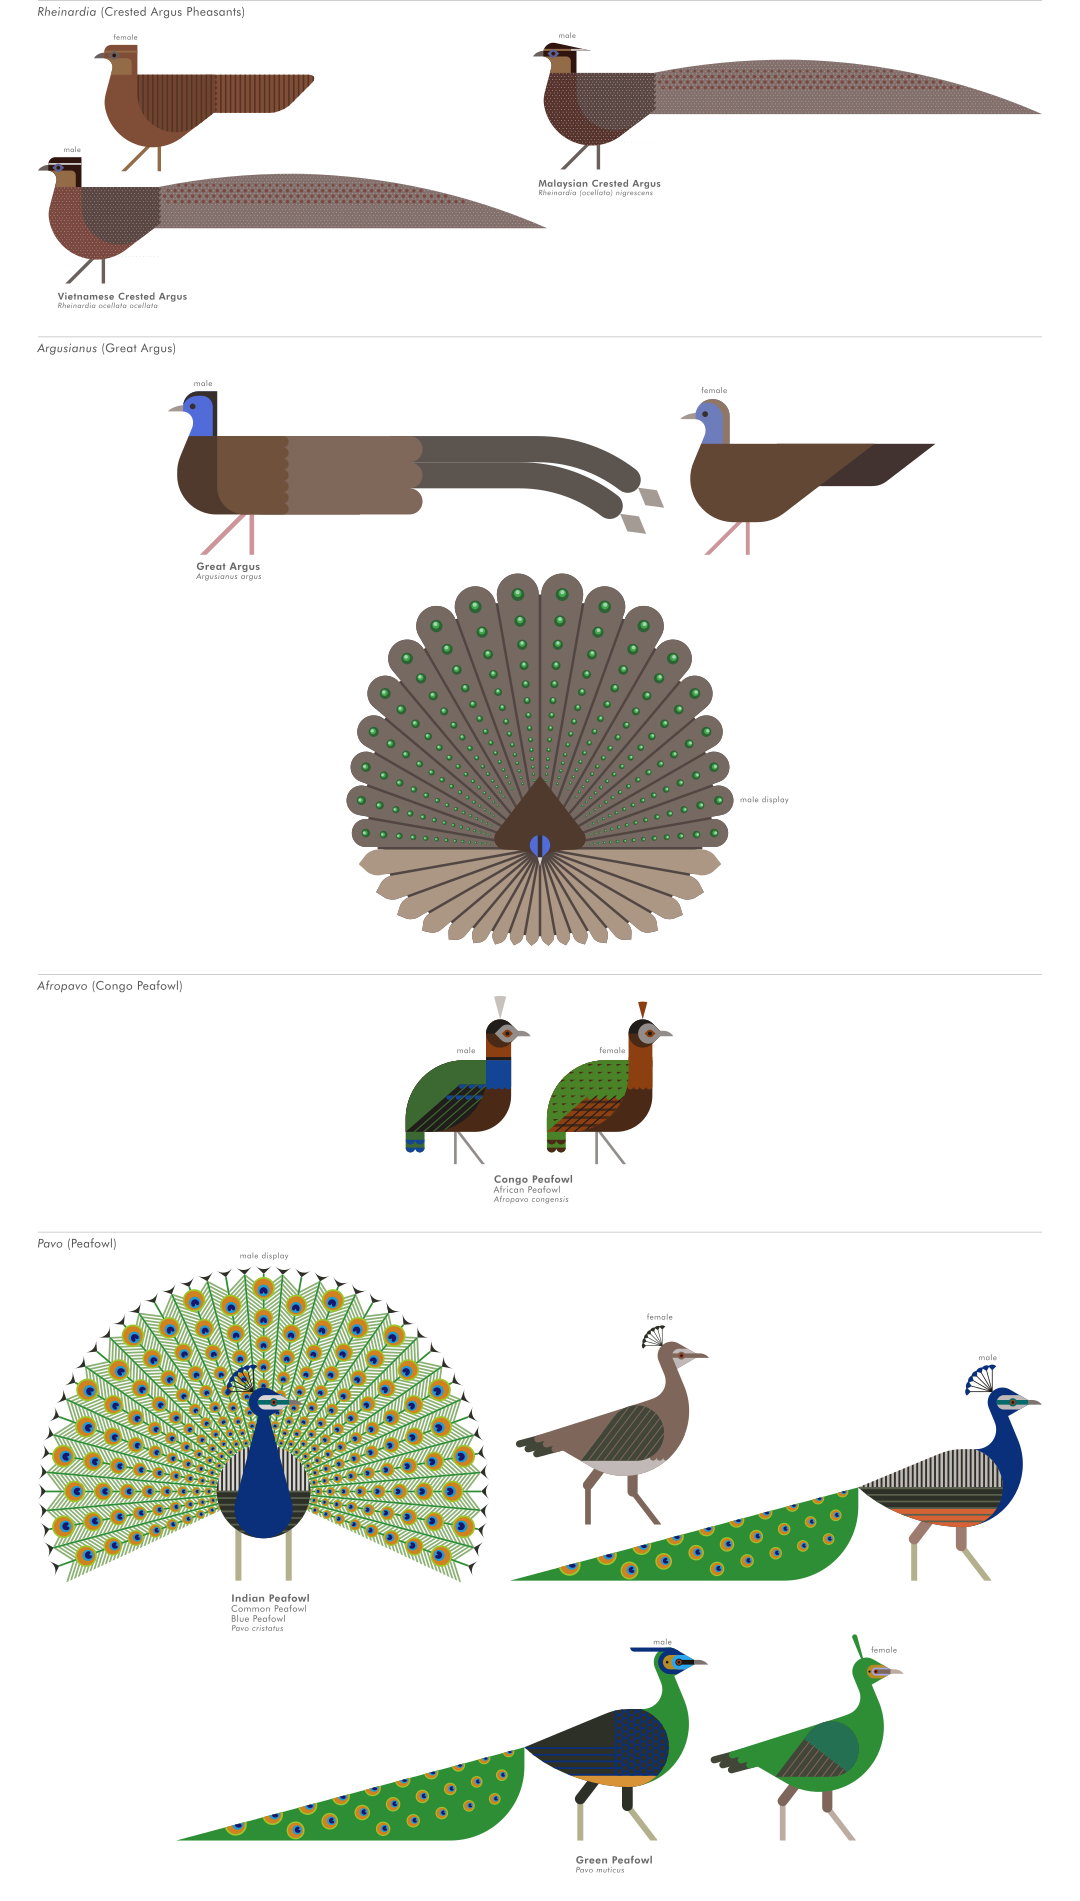 scott partridge - ave - avian vector encyclopedia - peafowl - bird vector art